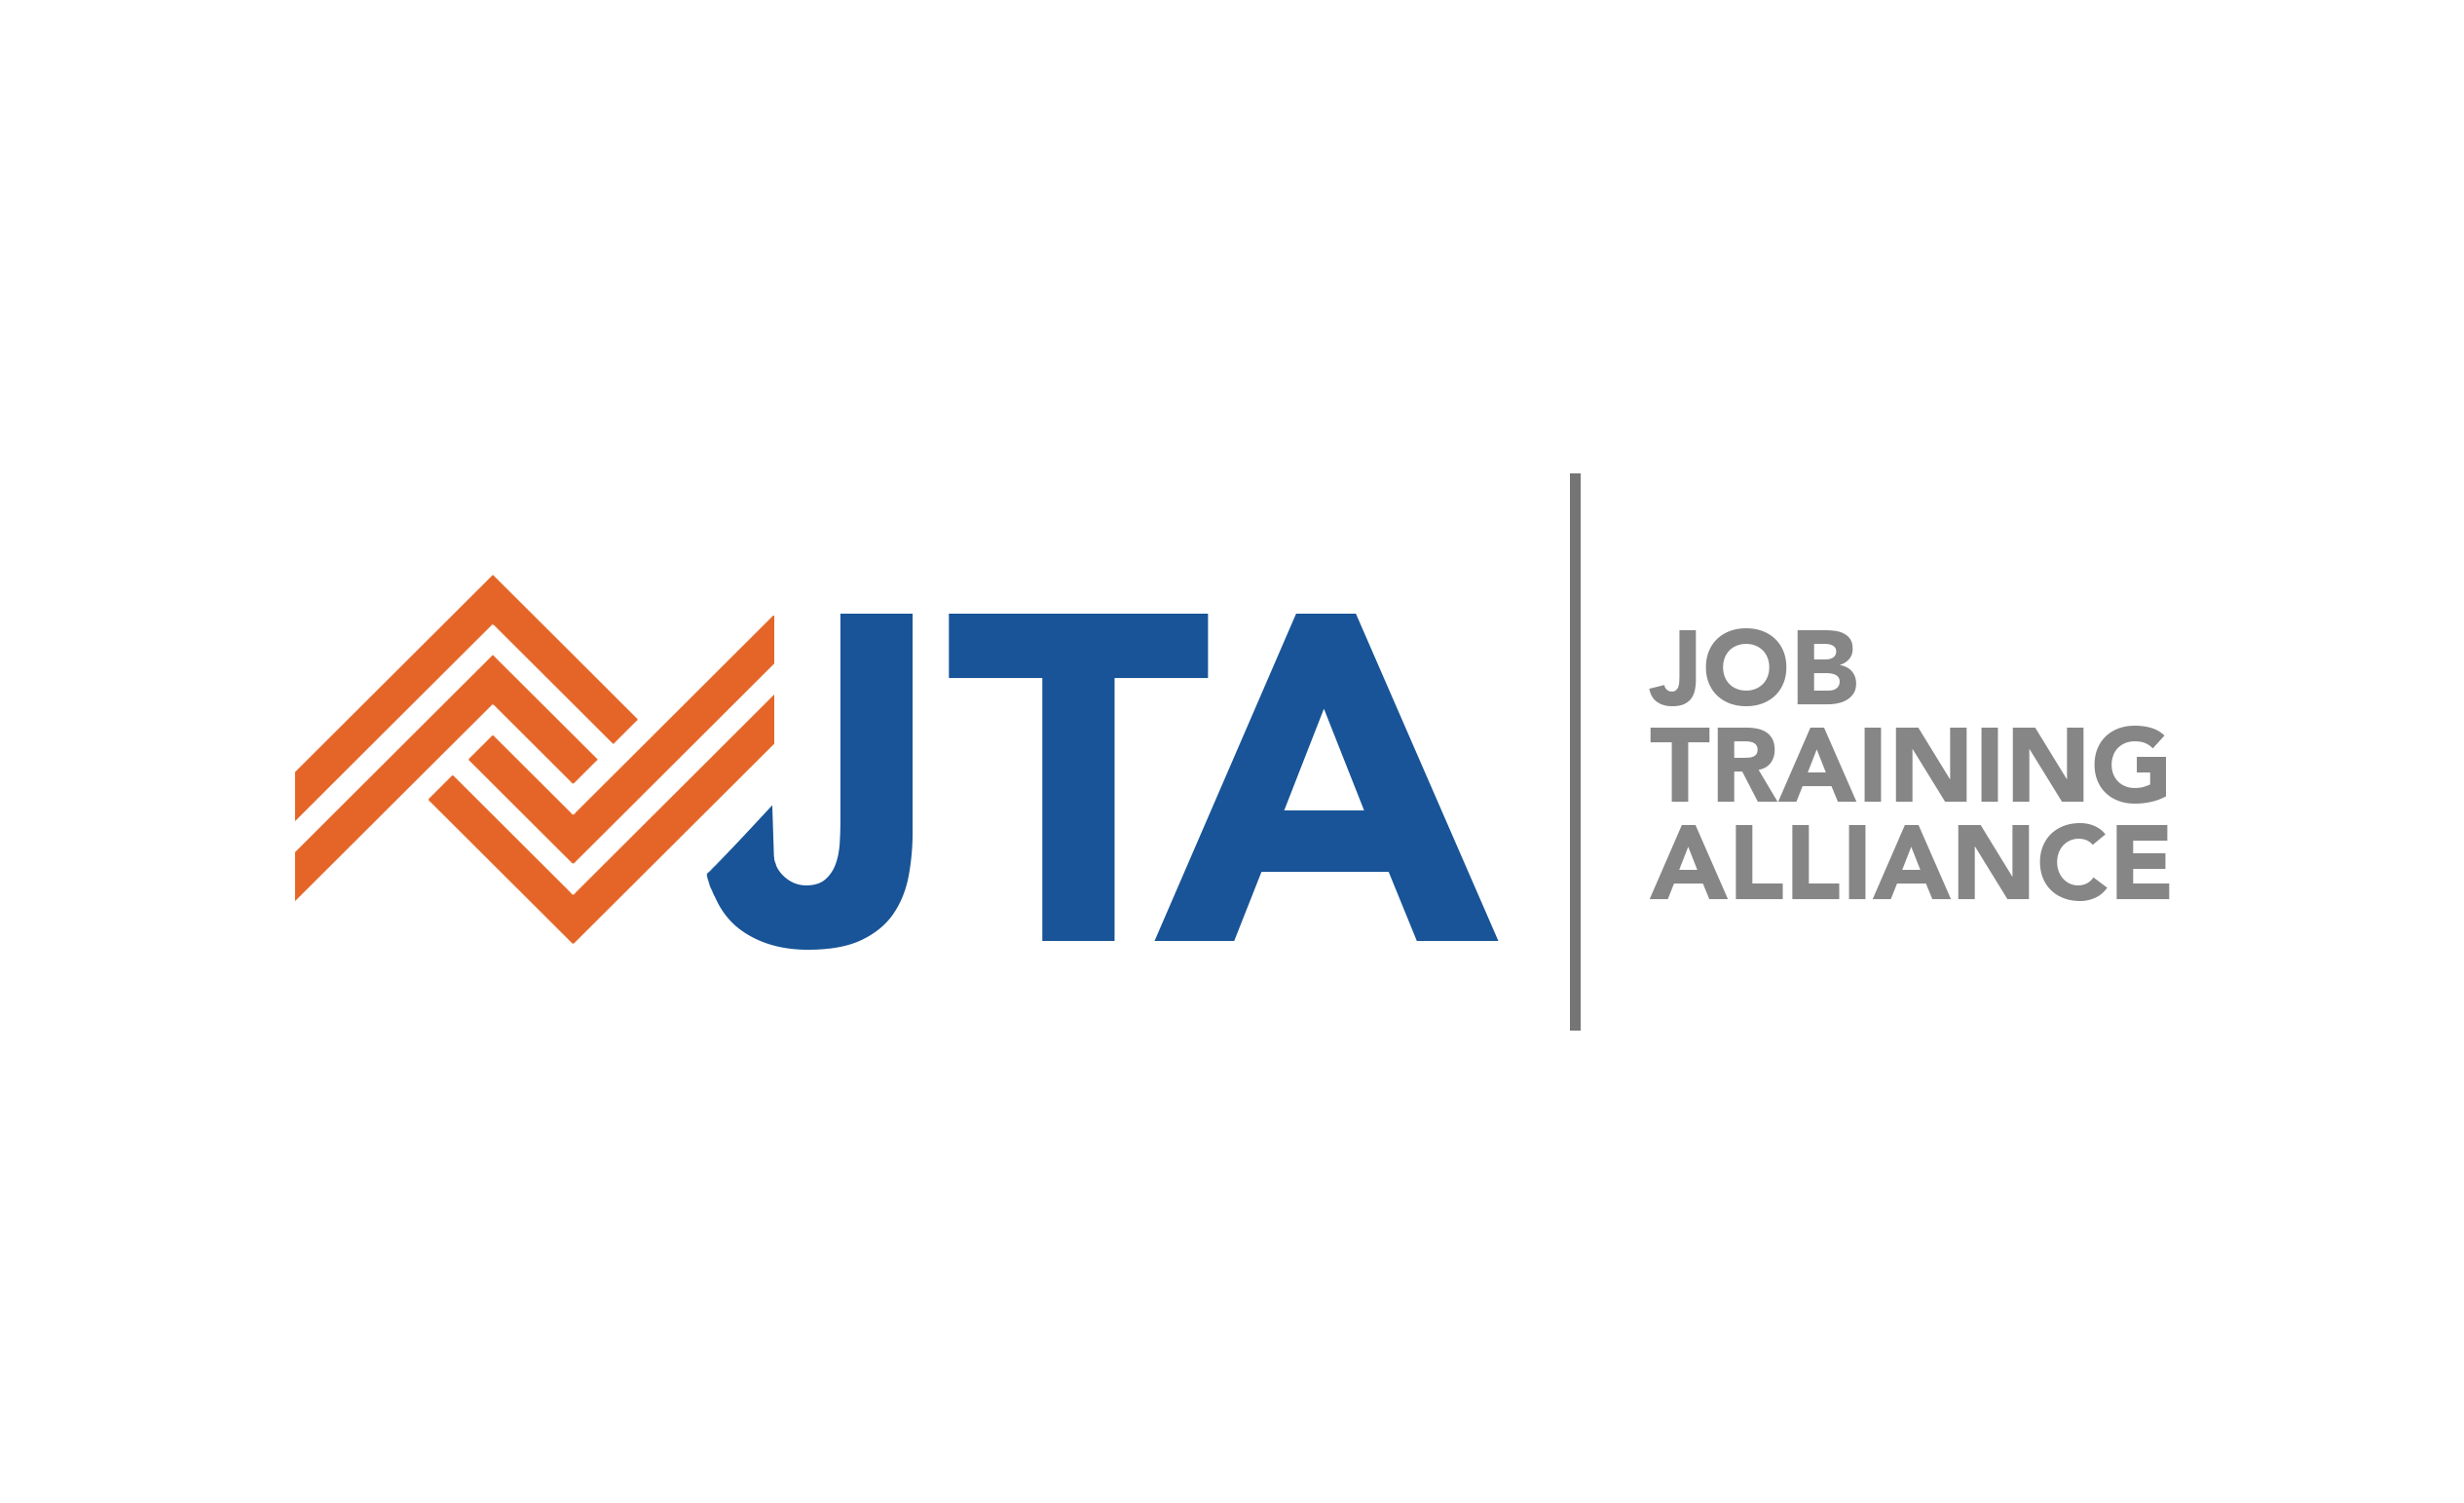 JTA Job Training Alliance Preparing People to Launch Successful Careers